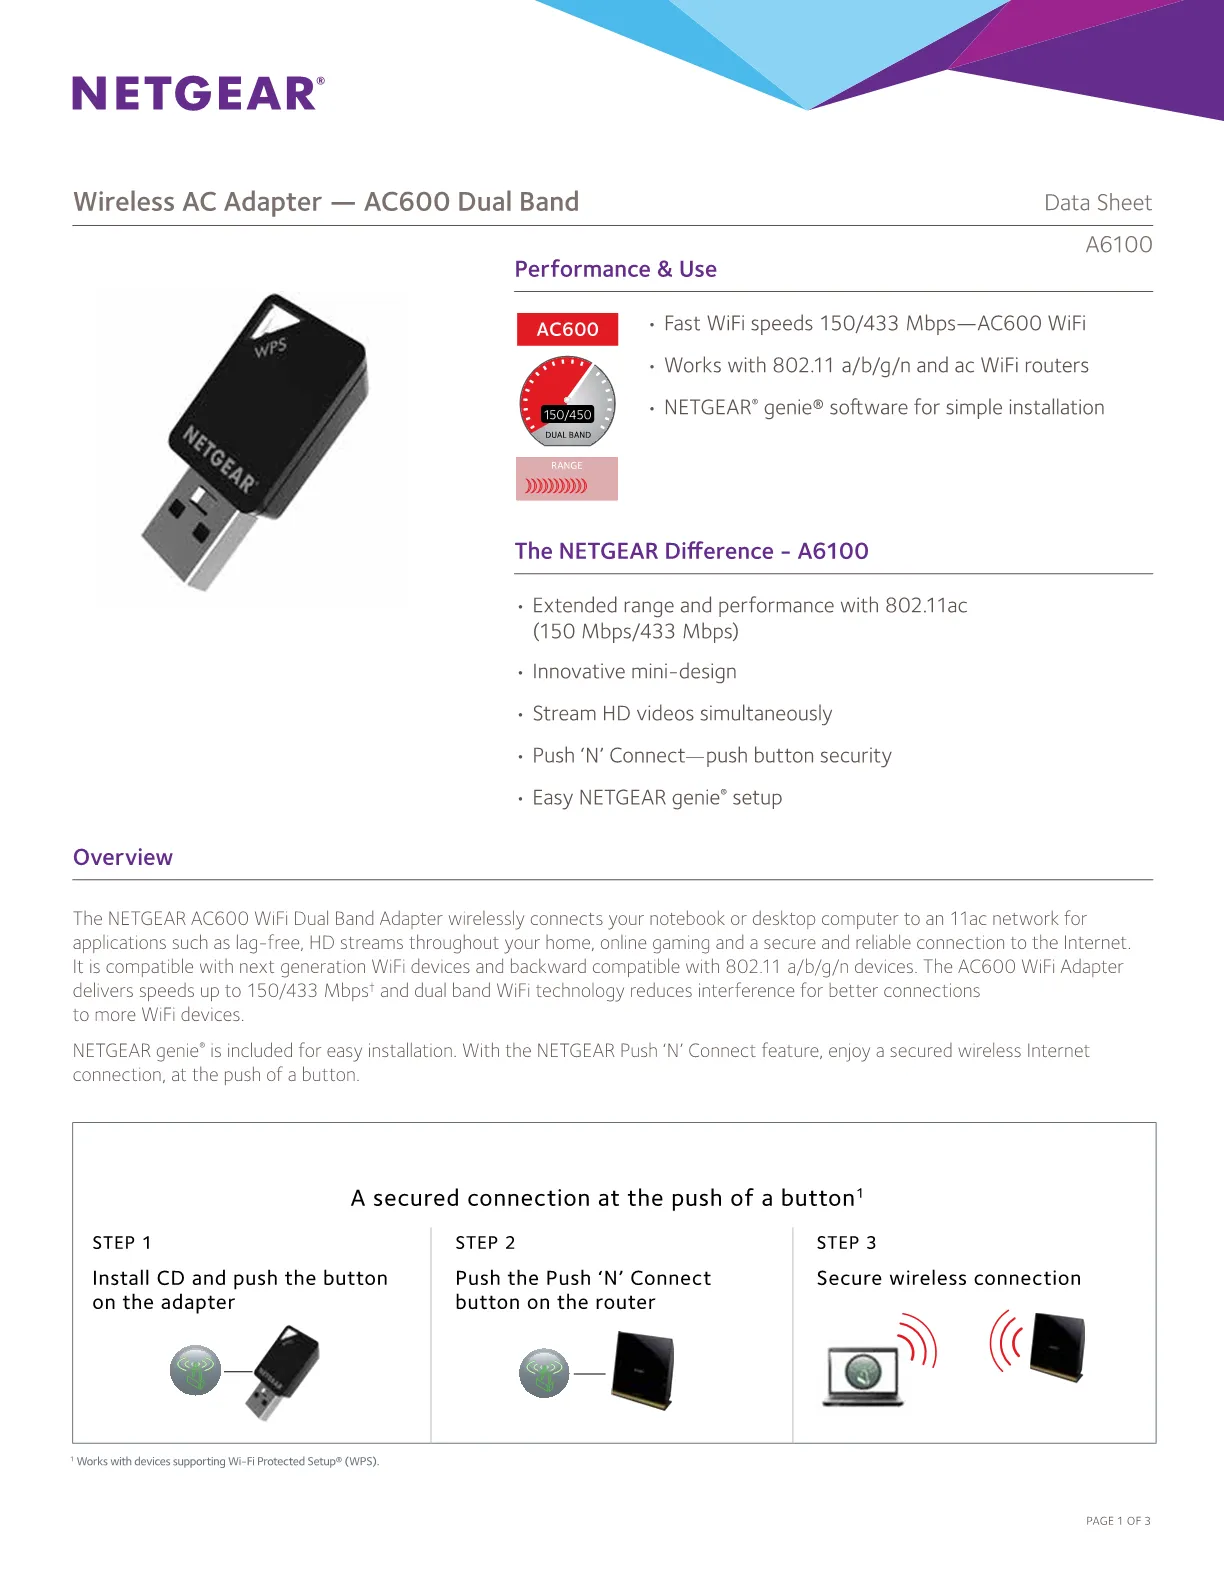 Minimer romersk gips NETGEAR AC600 USB DUAL BAND WI RELESS ADAPTER - A6100-10000S